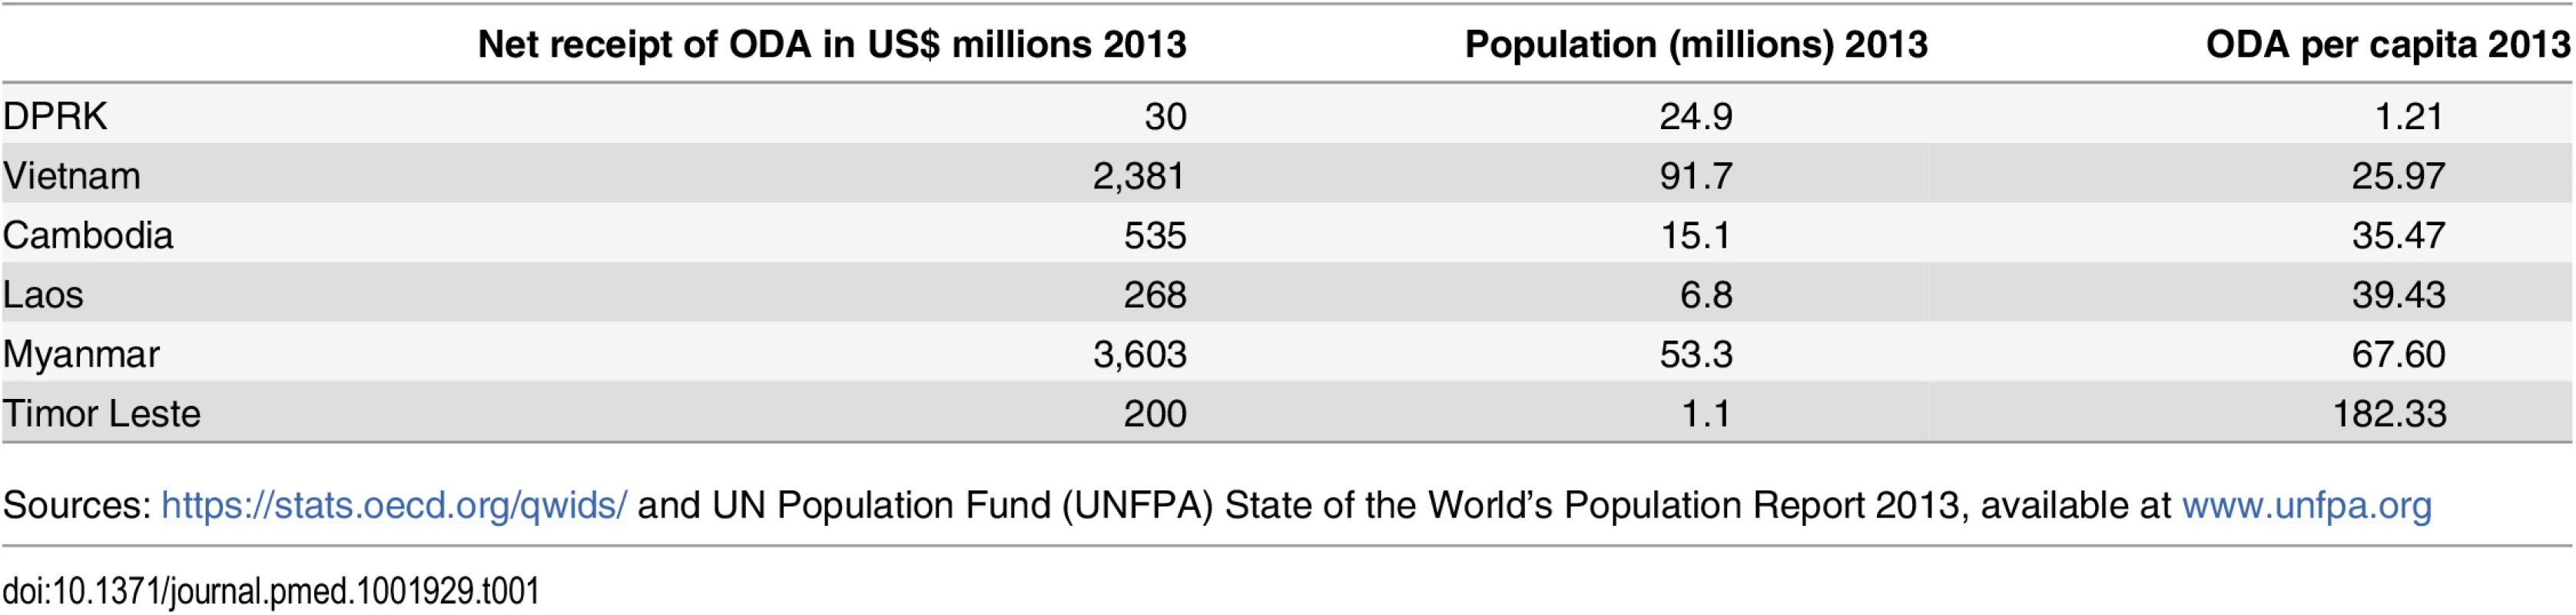 Net receipt of overseas development assistance (ODA) per capita in 2013 in selected nations.